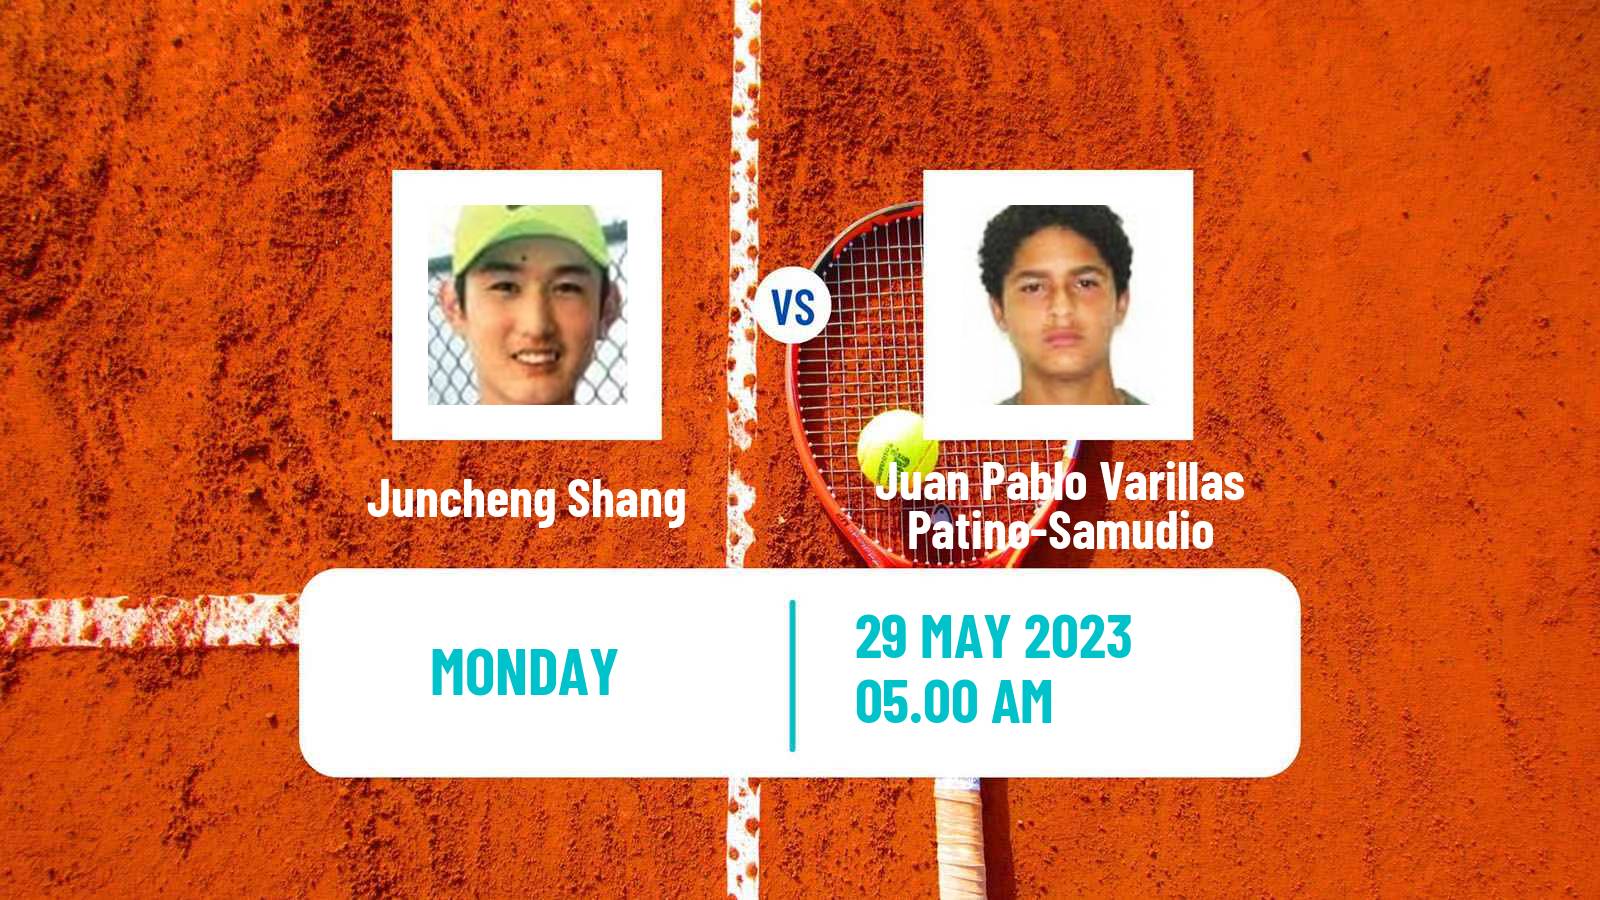 Tennis ATP Roland Garros Juncheng Shang - Juan Pablo Varillas Patino-Samudio